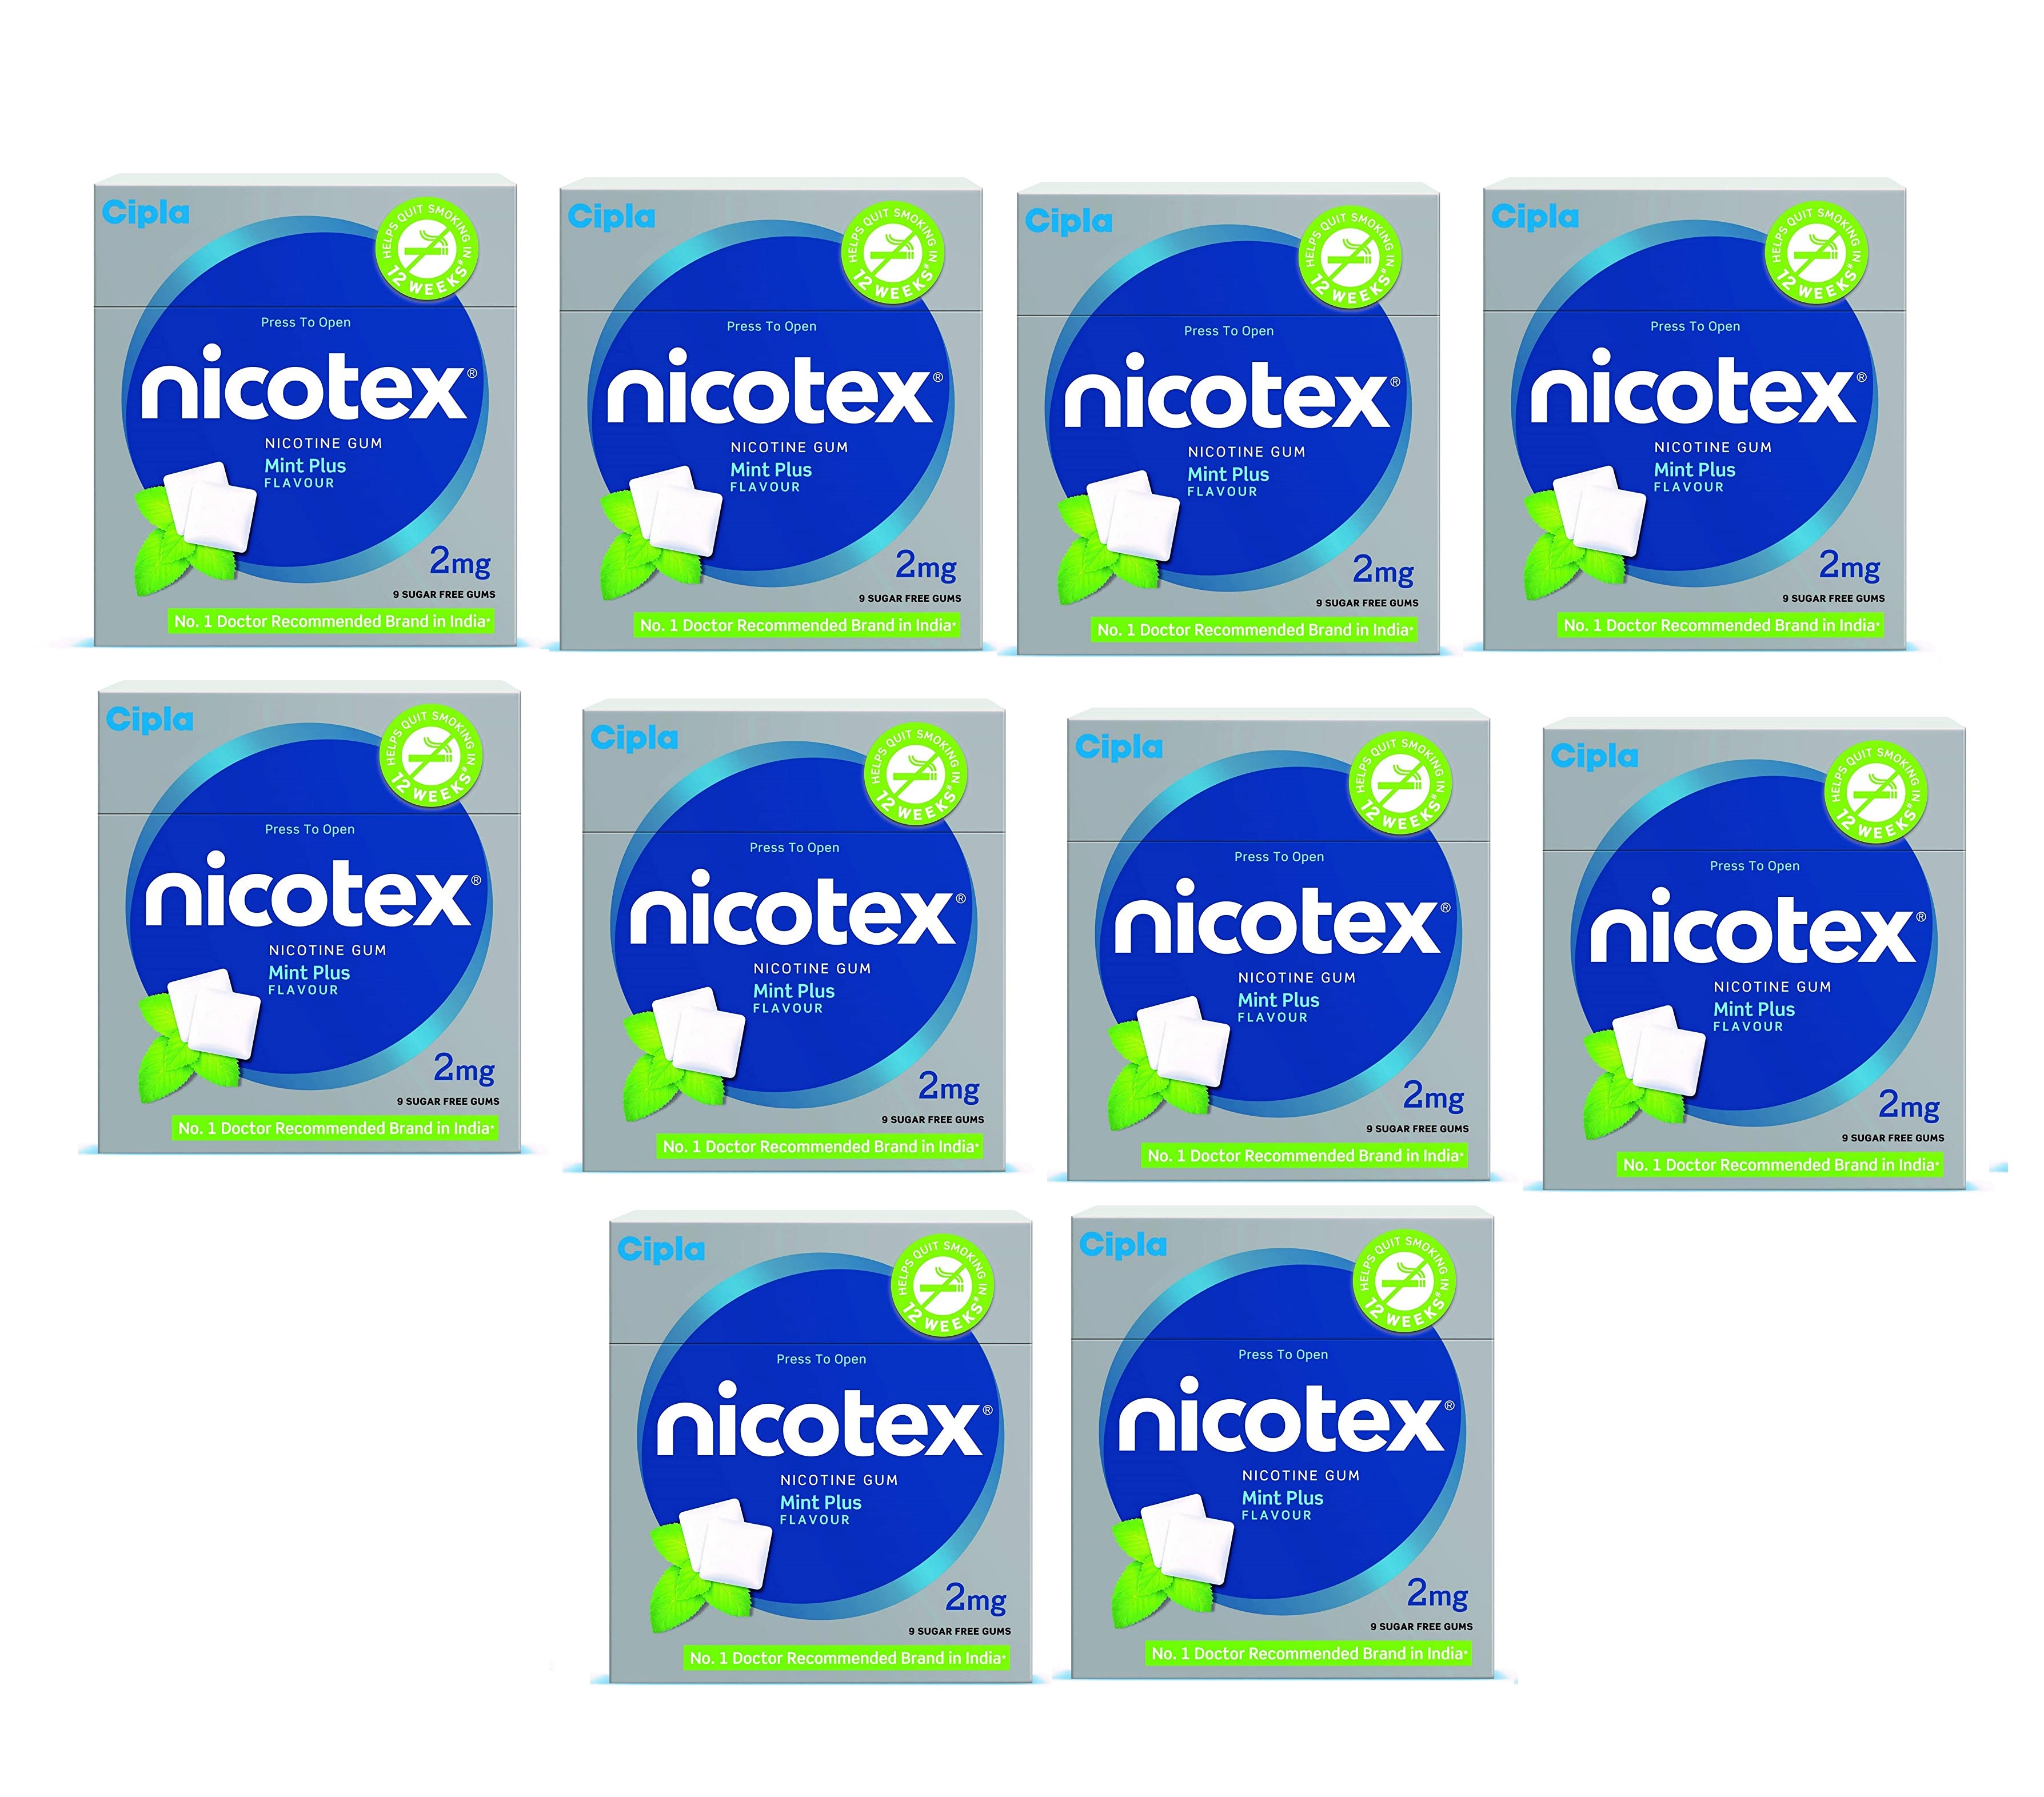 Nicotex 2mg mint plus Flavour Nicotine Gum Pack of 10 boxes